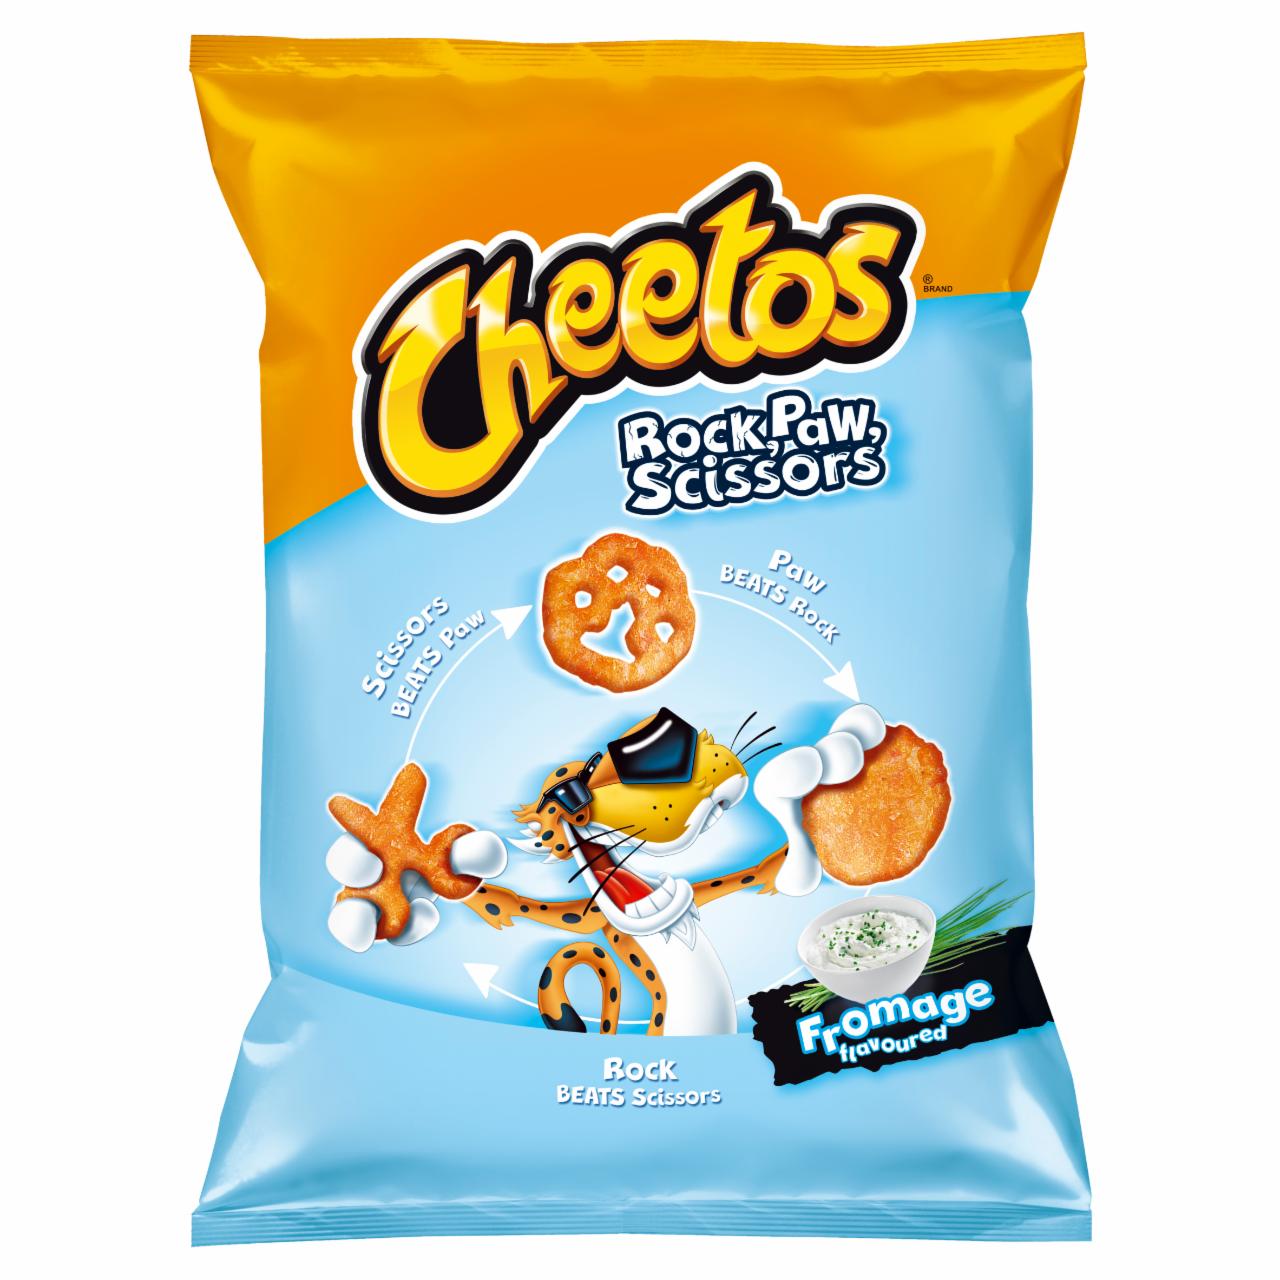 Képek - Cheetos Rock, Paw, Scissors tejfölös ízű kukoricasnack 85 g